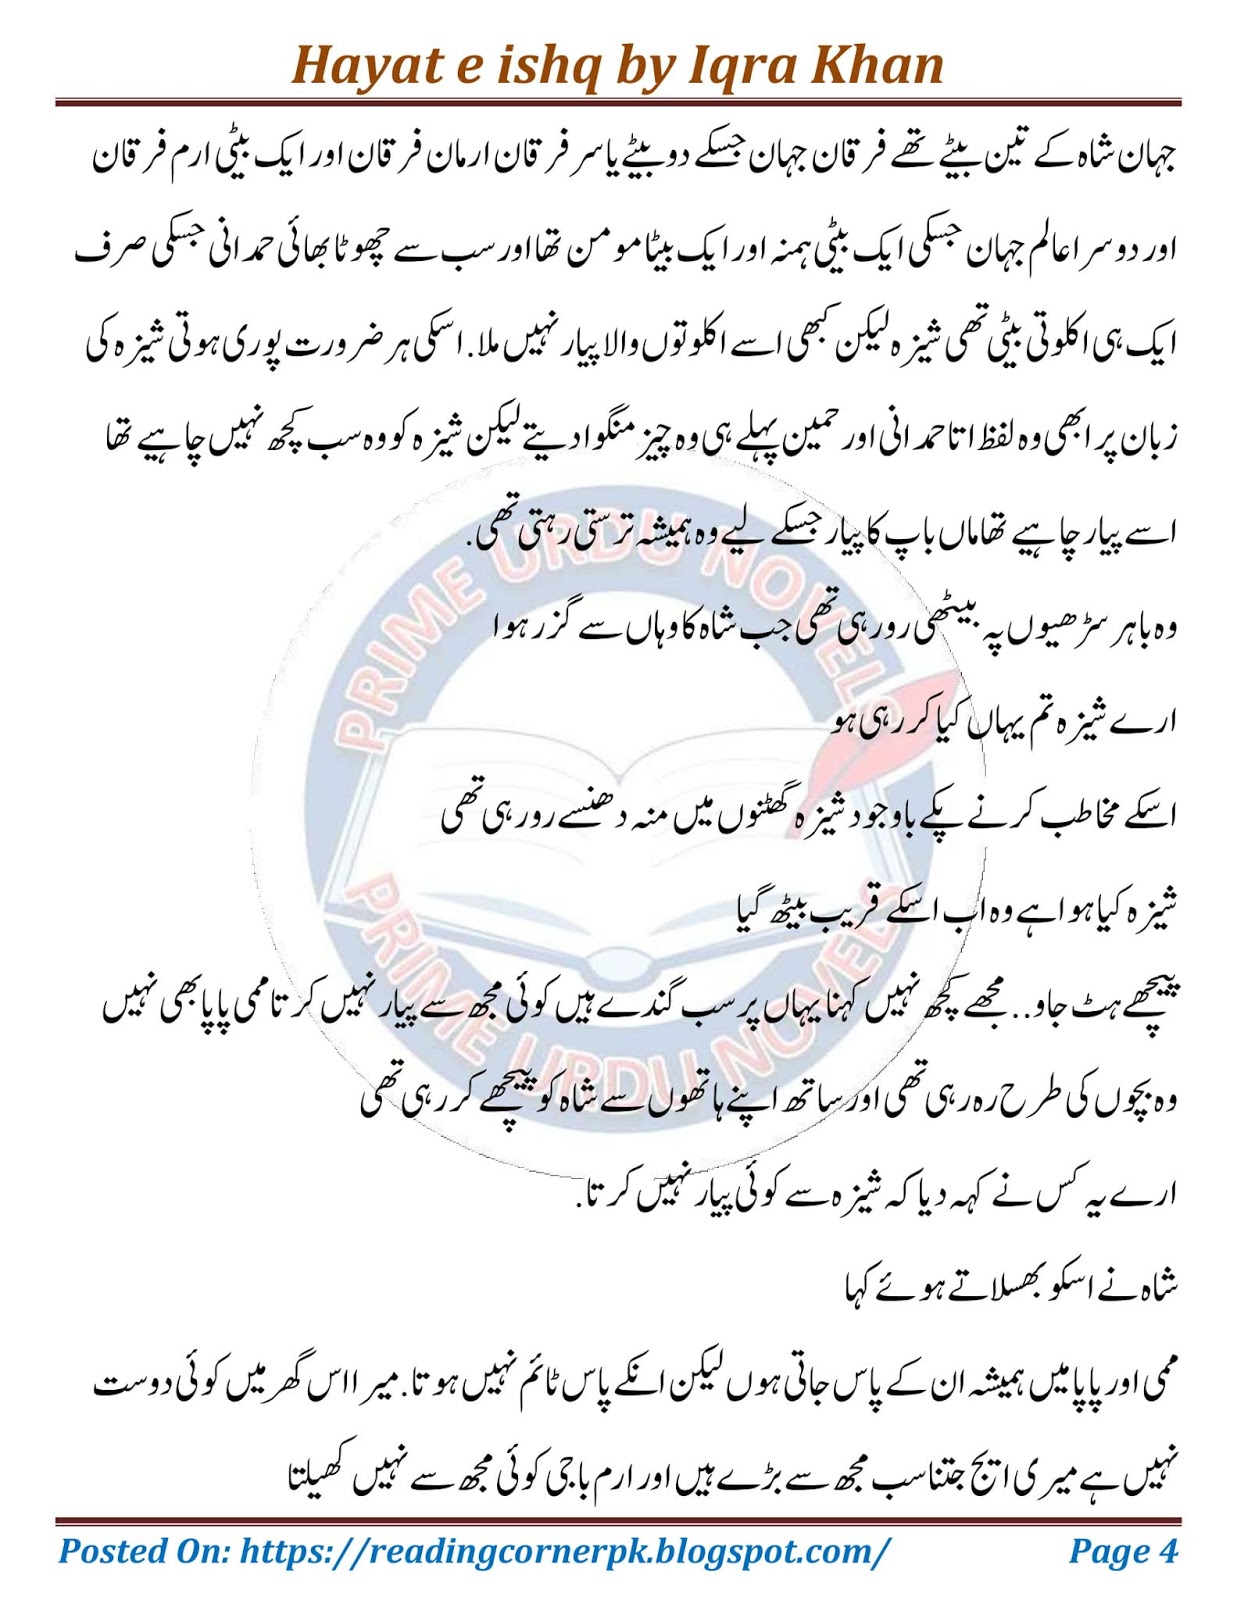 Readdersden: Hayat e ishq novel by Iqra Khan complete PDF